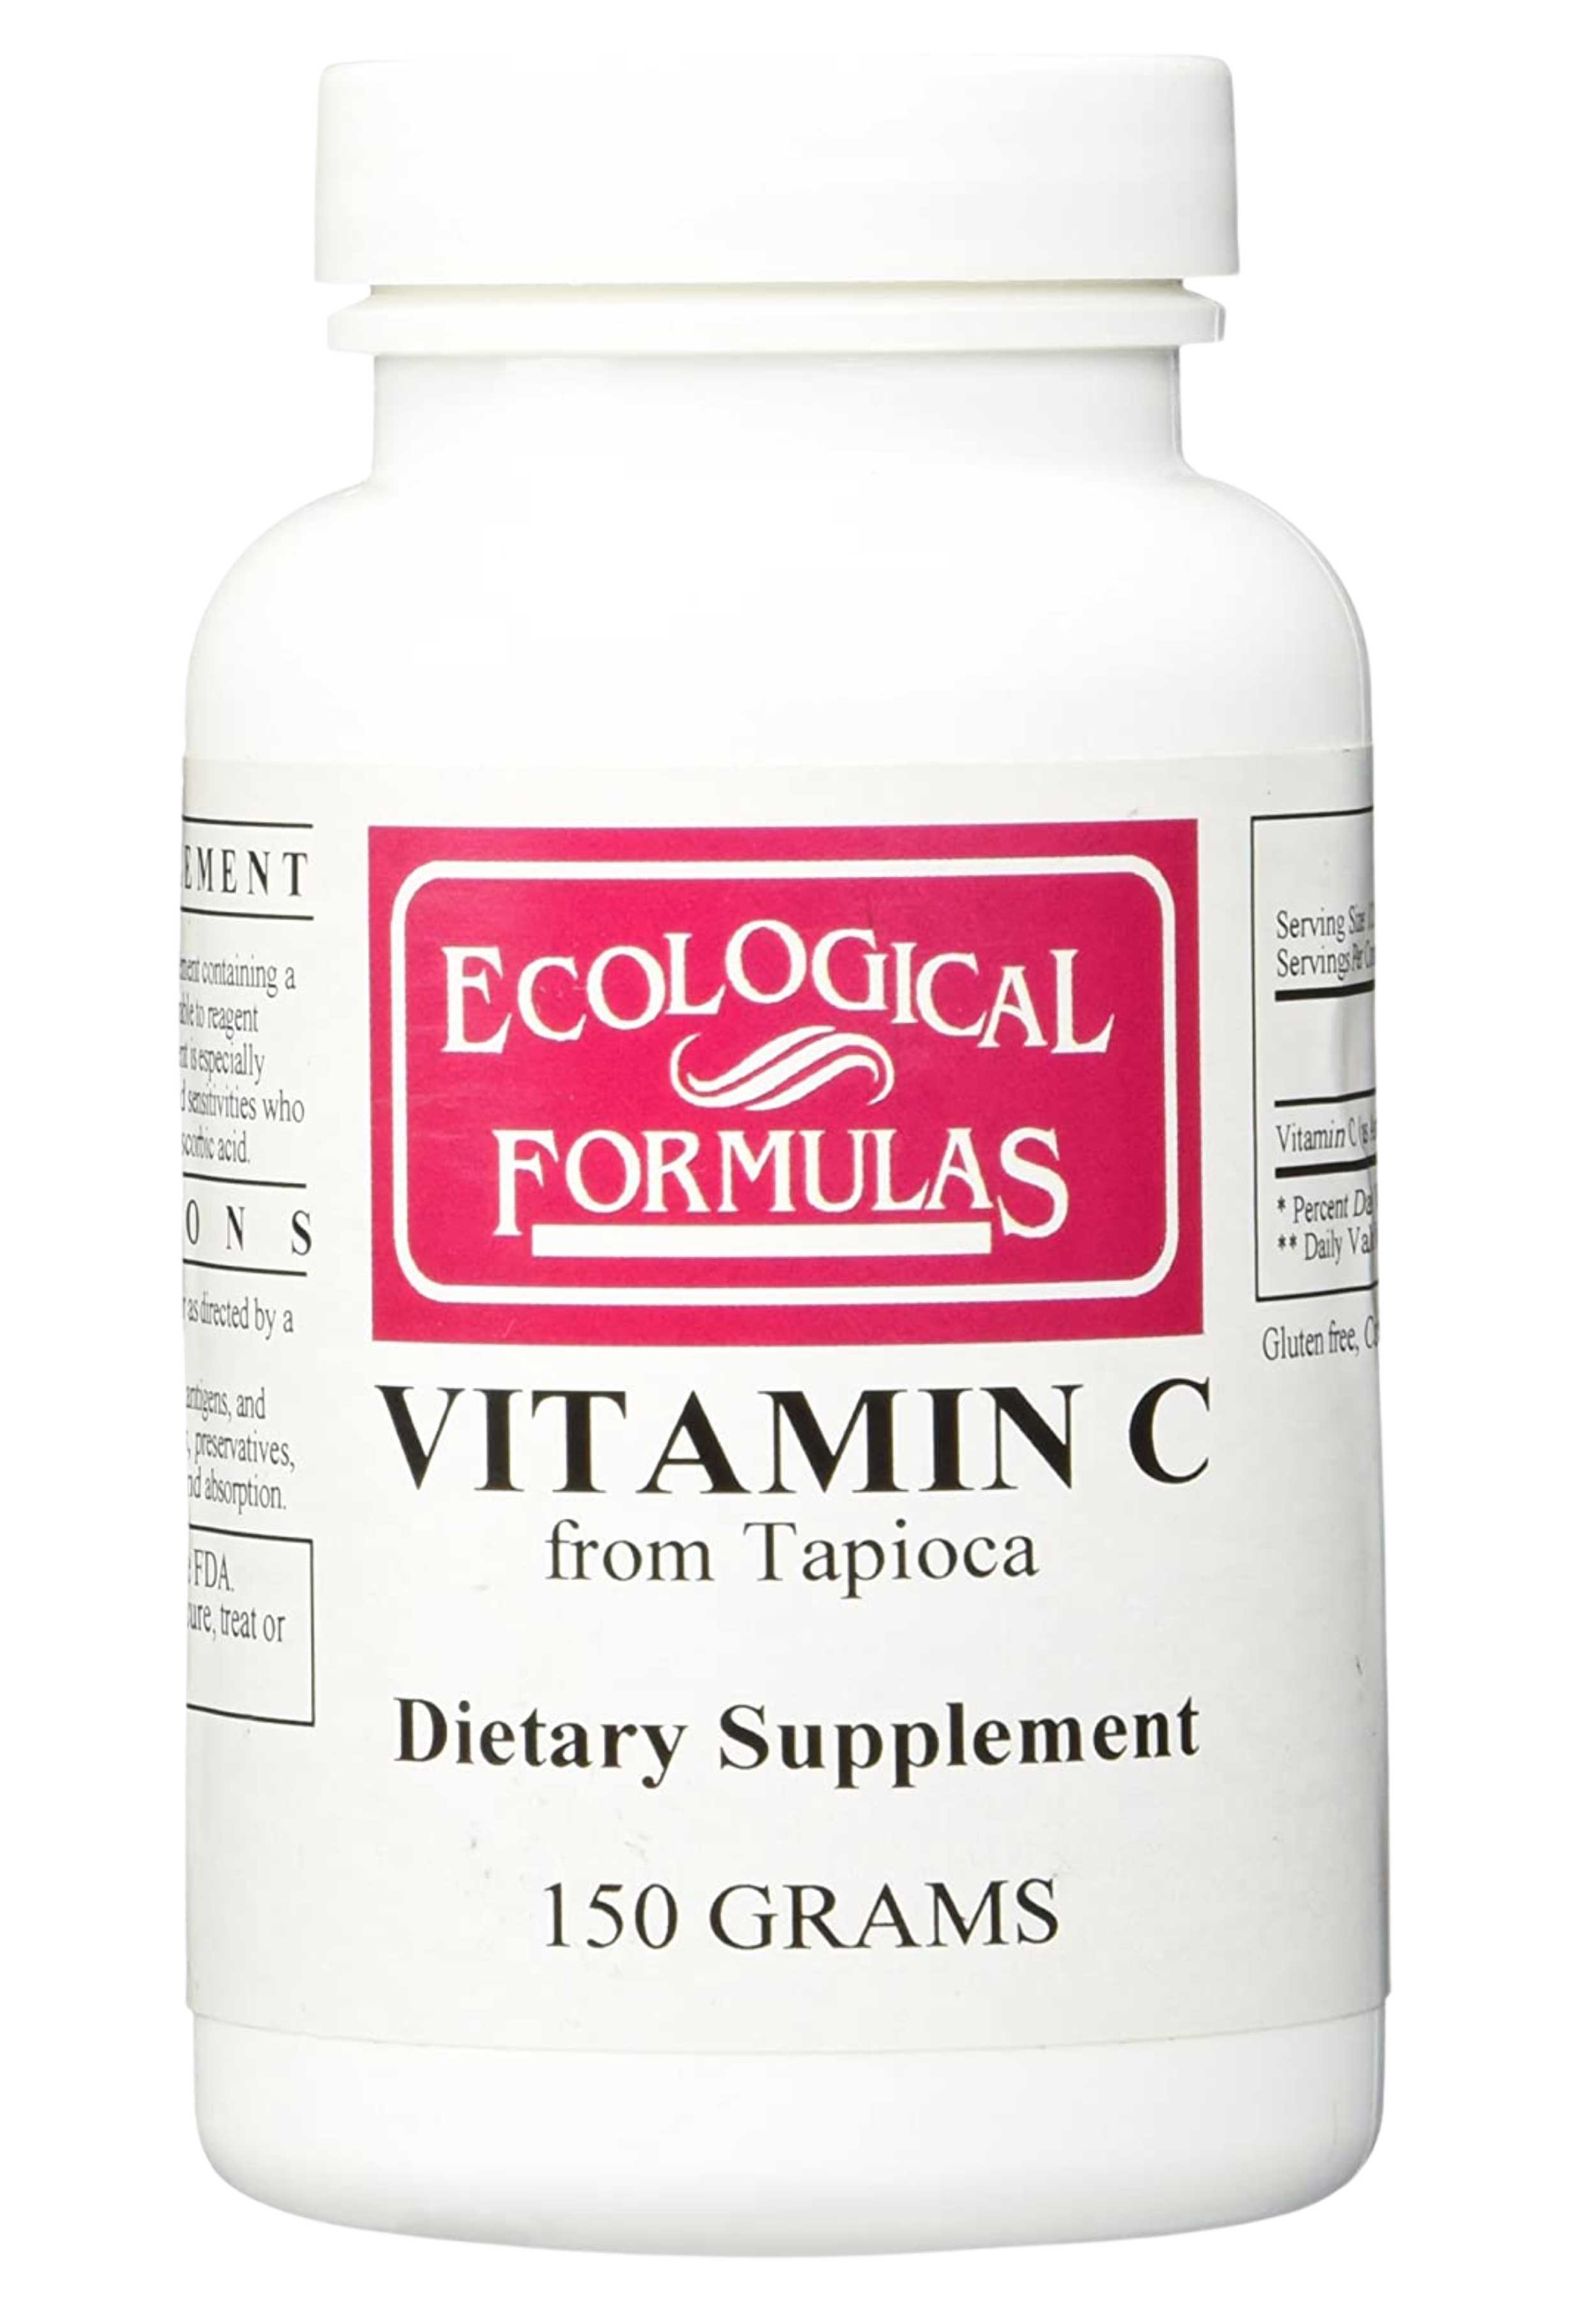 Ecological Formulas/Cardiovascular Research Vitamin C from Tapioca